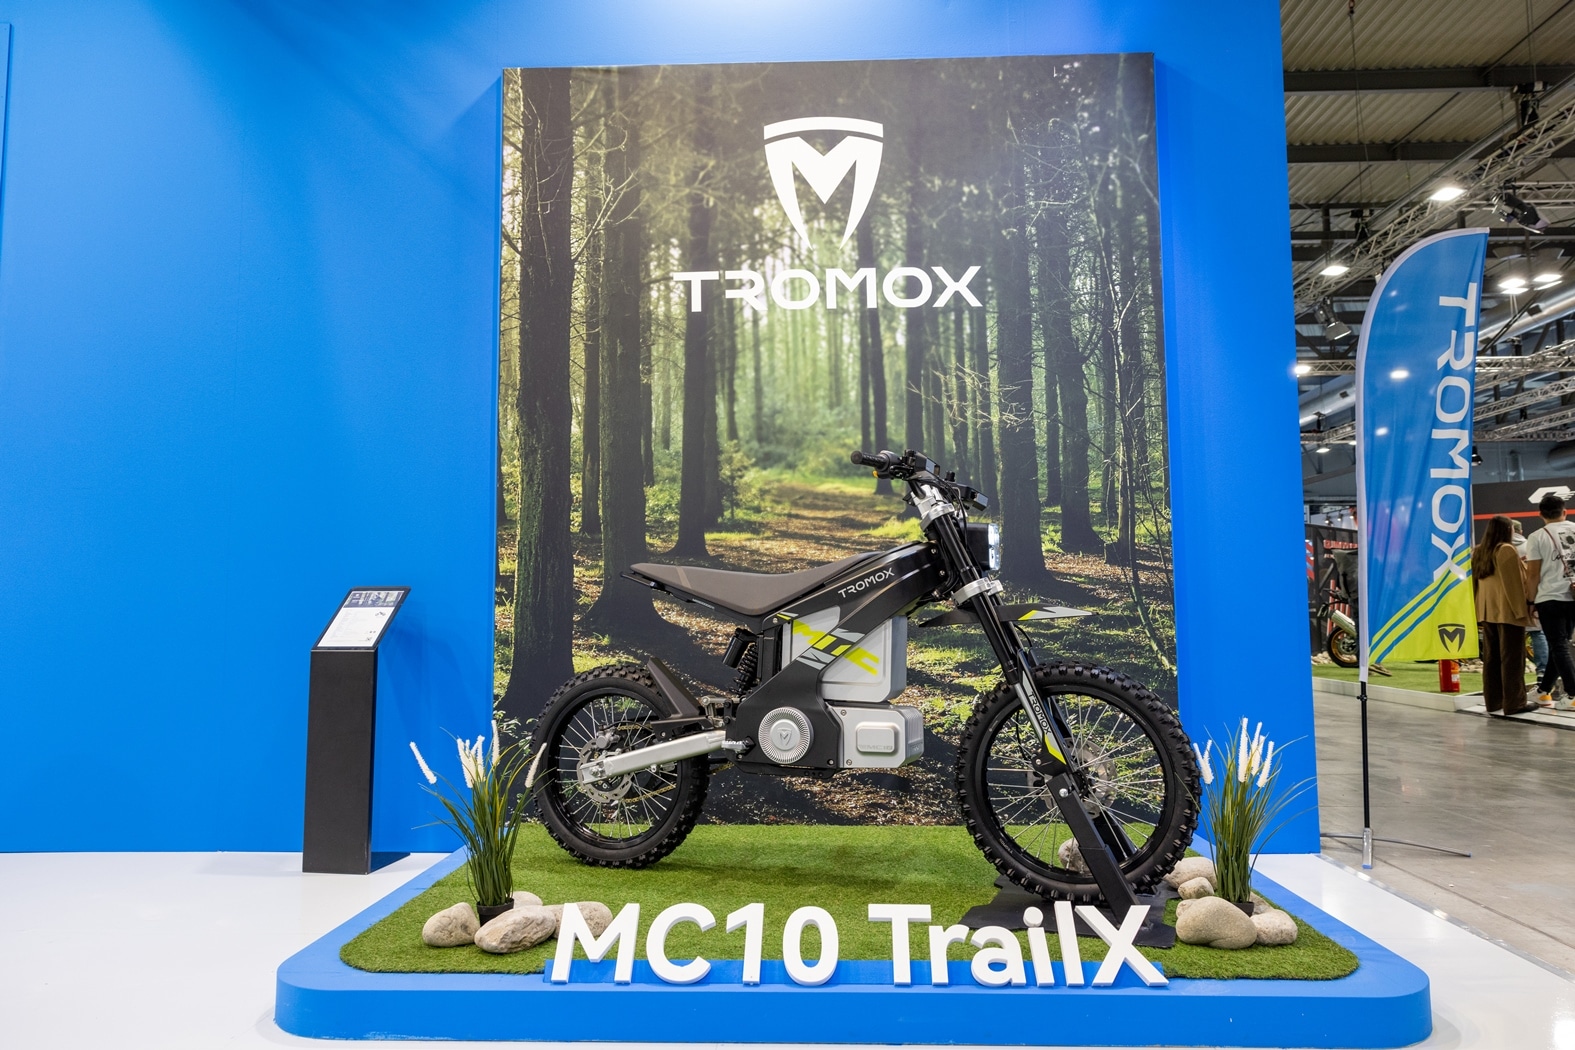 Tromox MC10 StreetX e MC10 Trailx - EICMA 2023